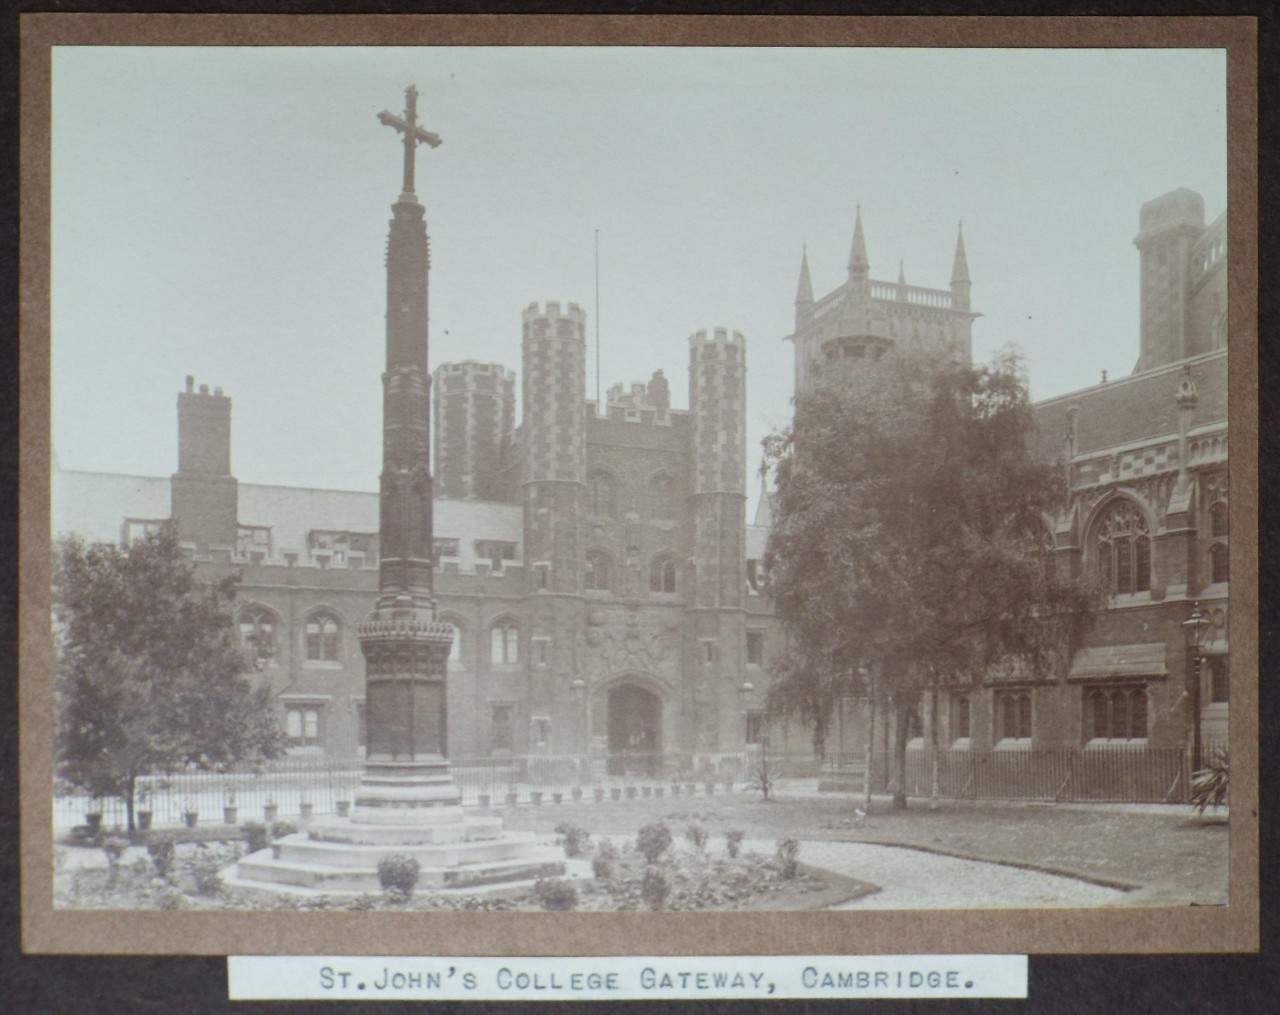 Photograph - St. John's College Gateway, Cambridge.